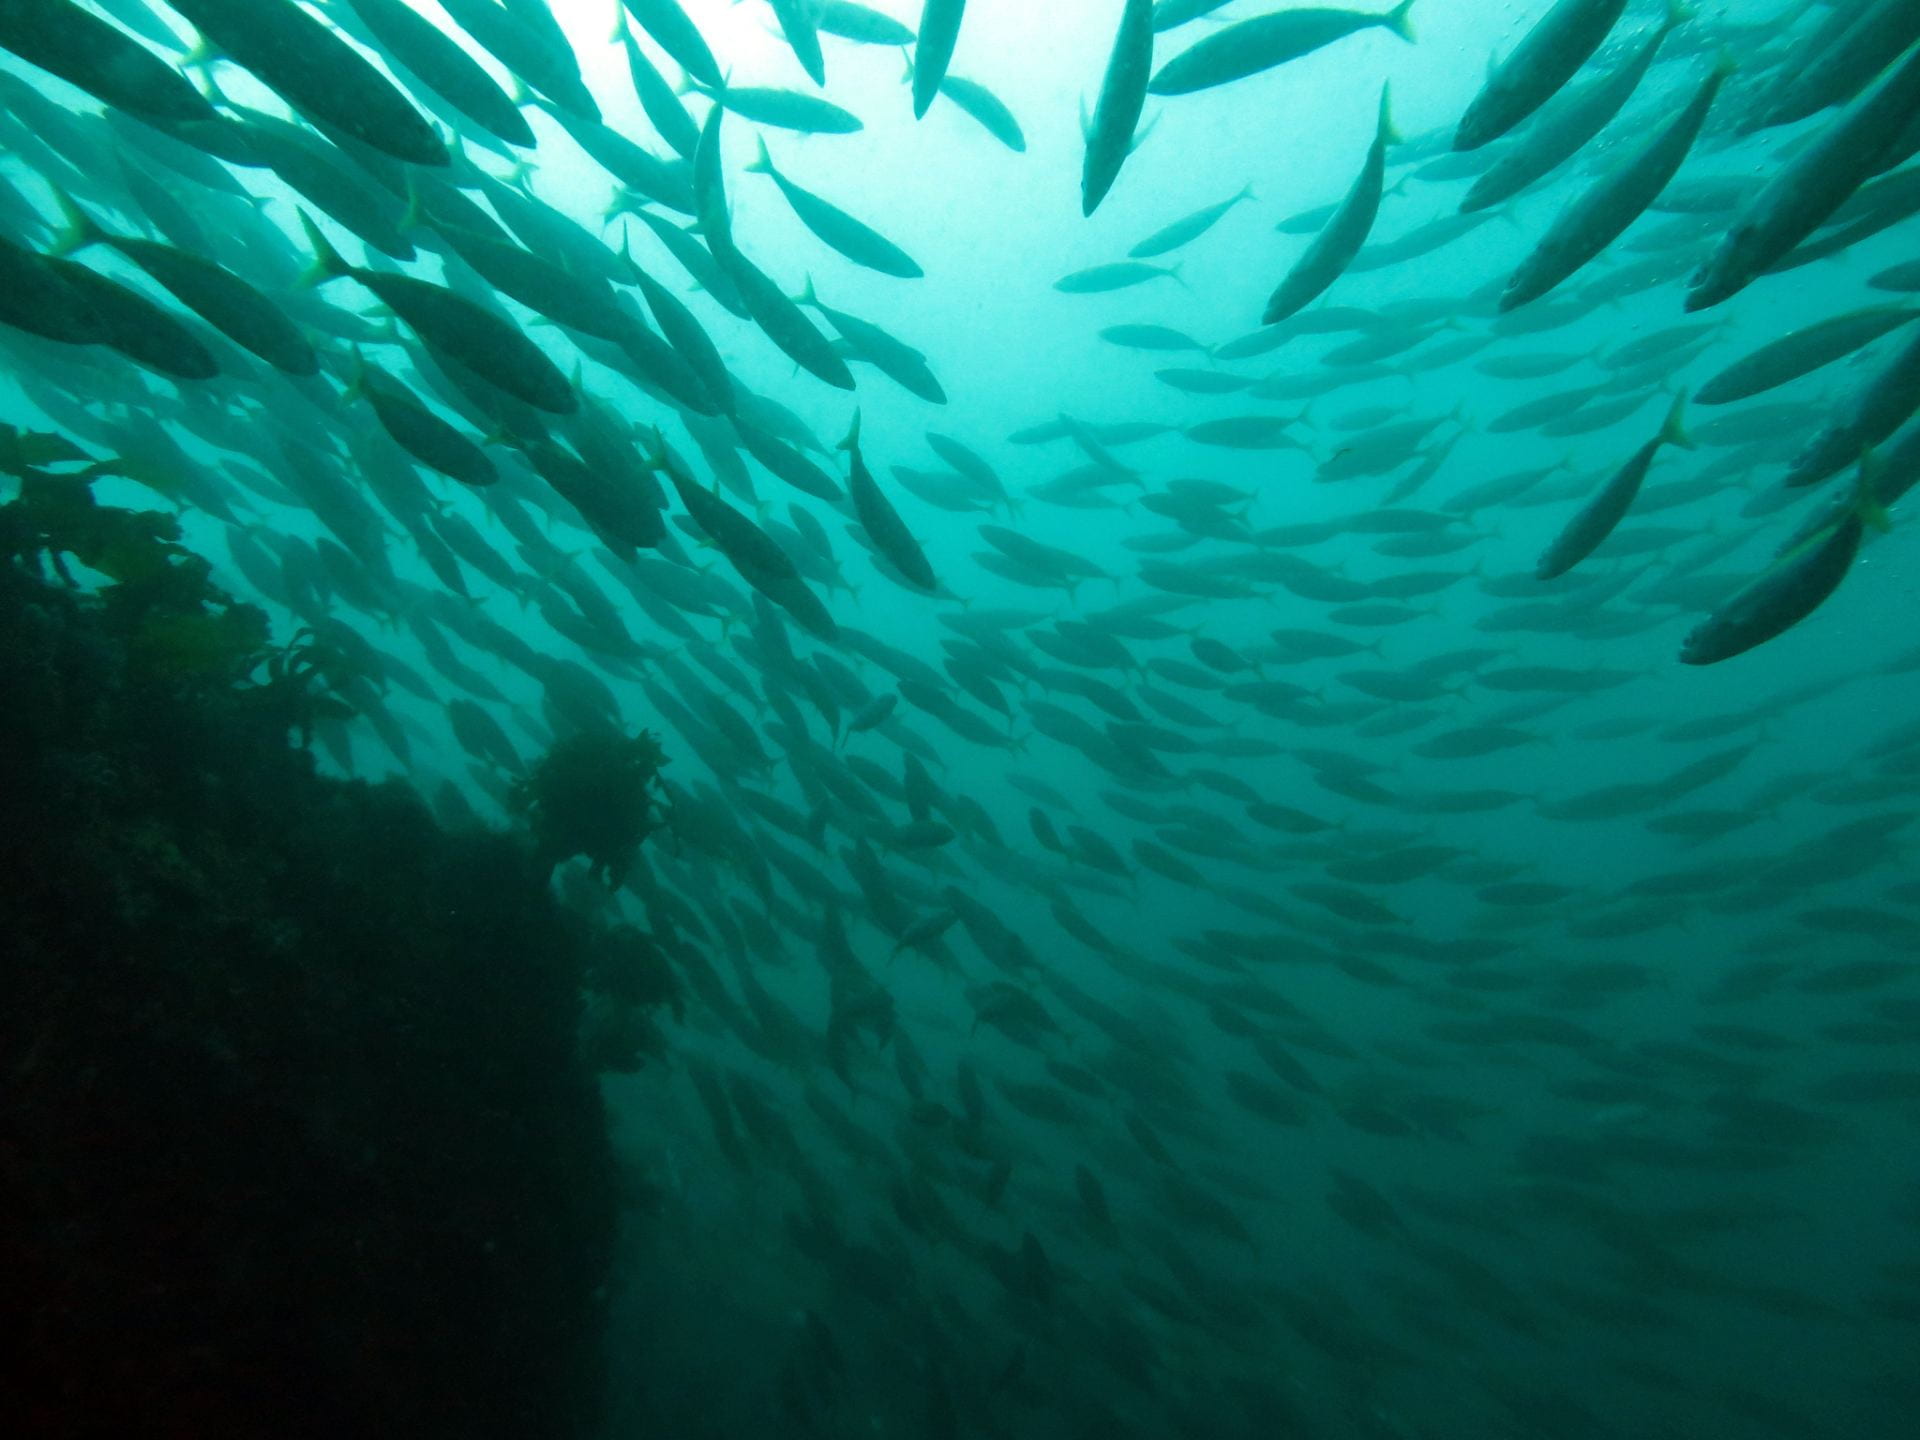 A school of koheru fish silhouetted in greenish water